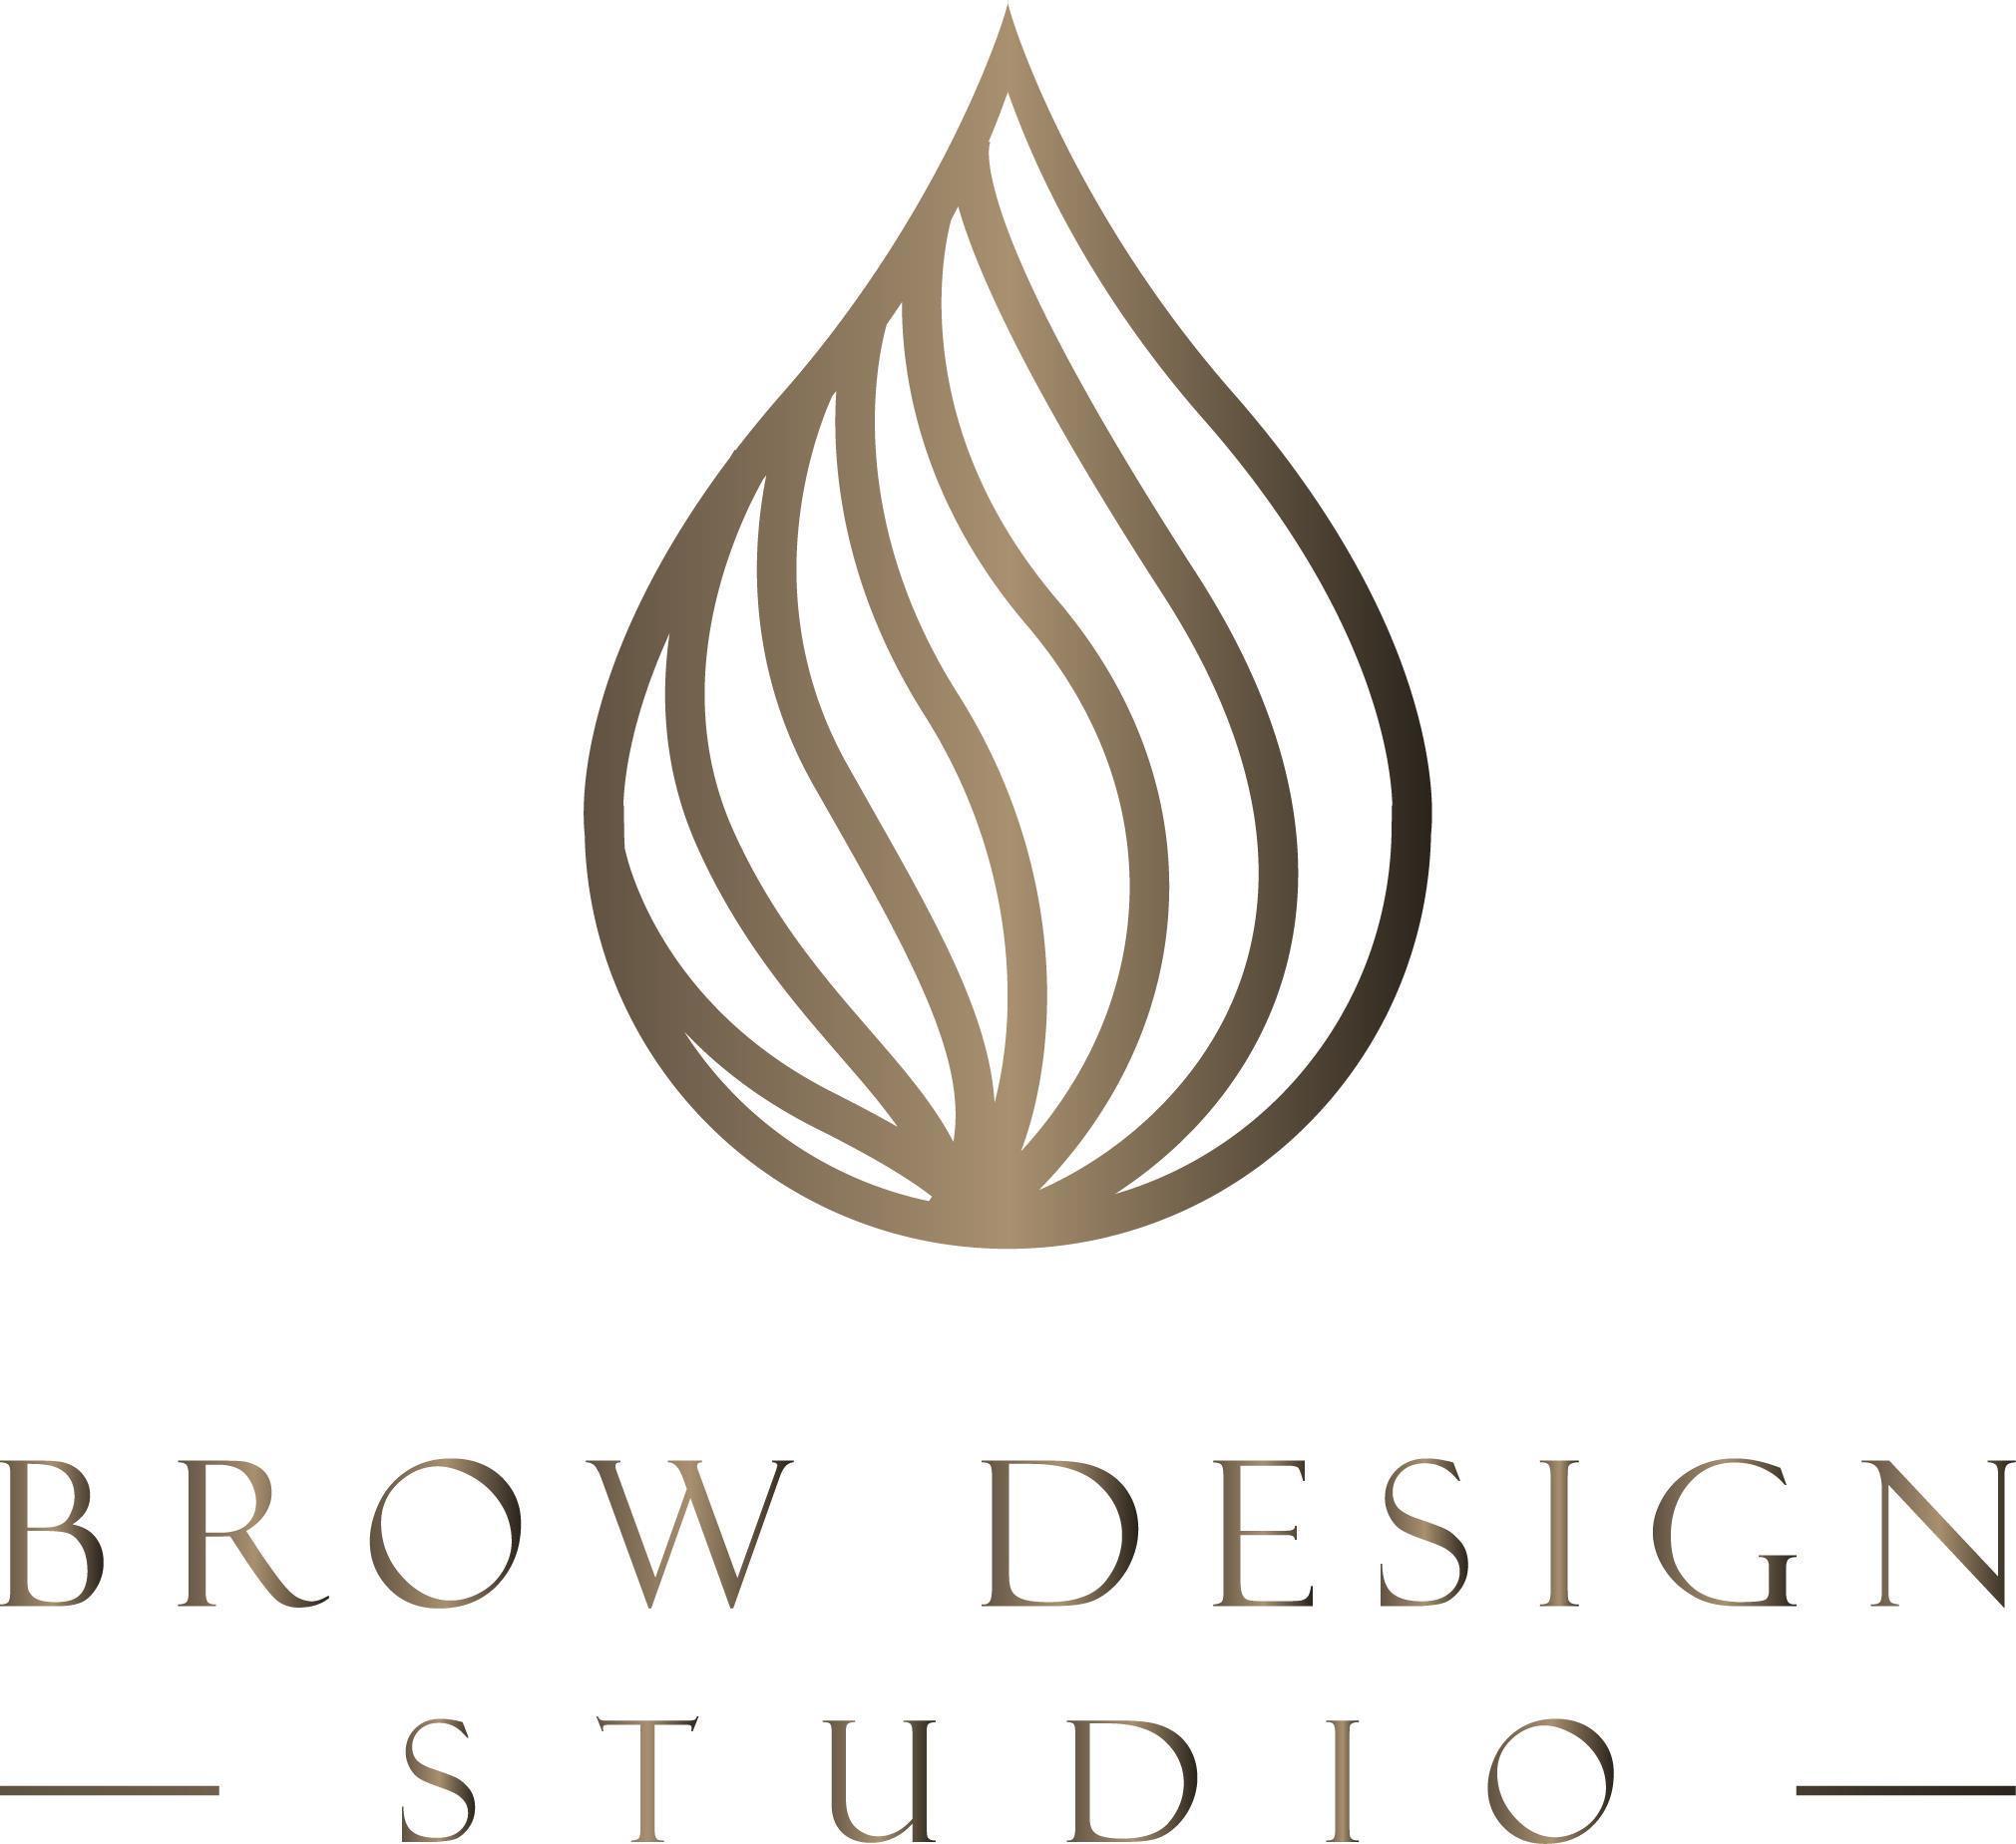 Brow Design Studio